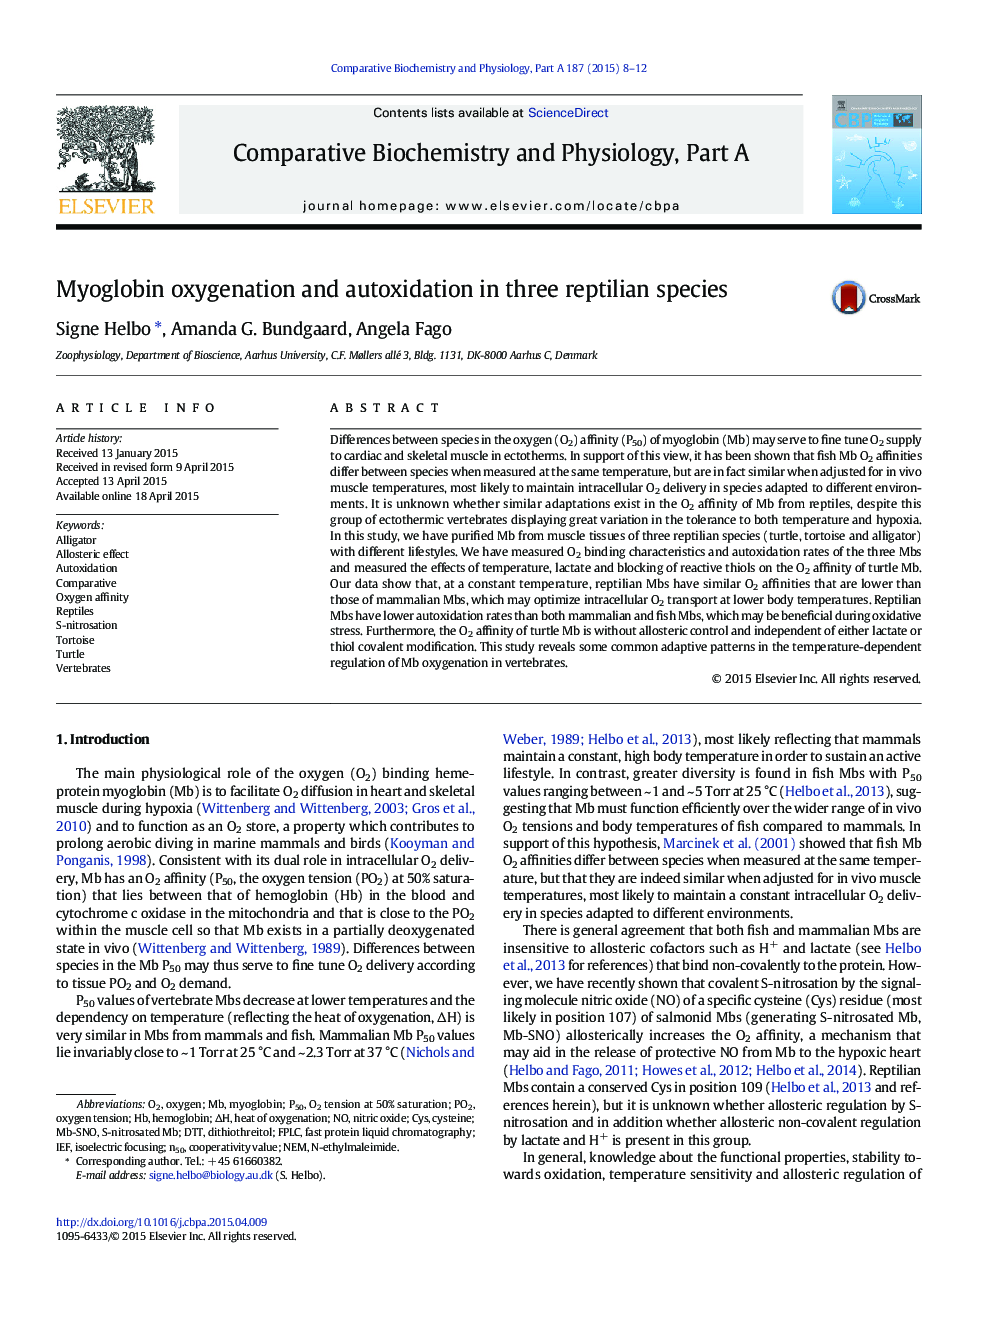 Myoglobin oxygenation and autoxidation in three reptilian species